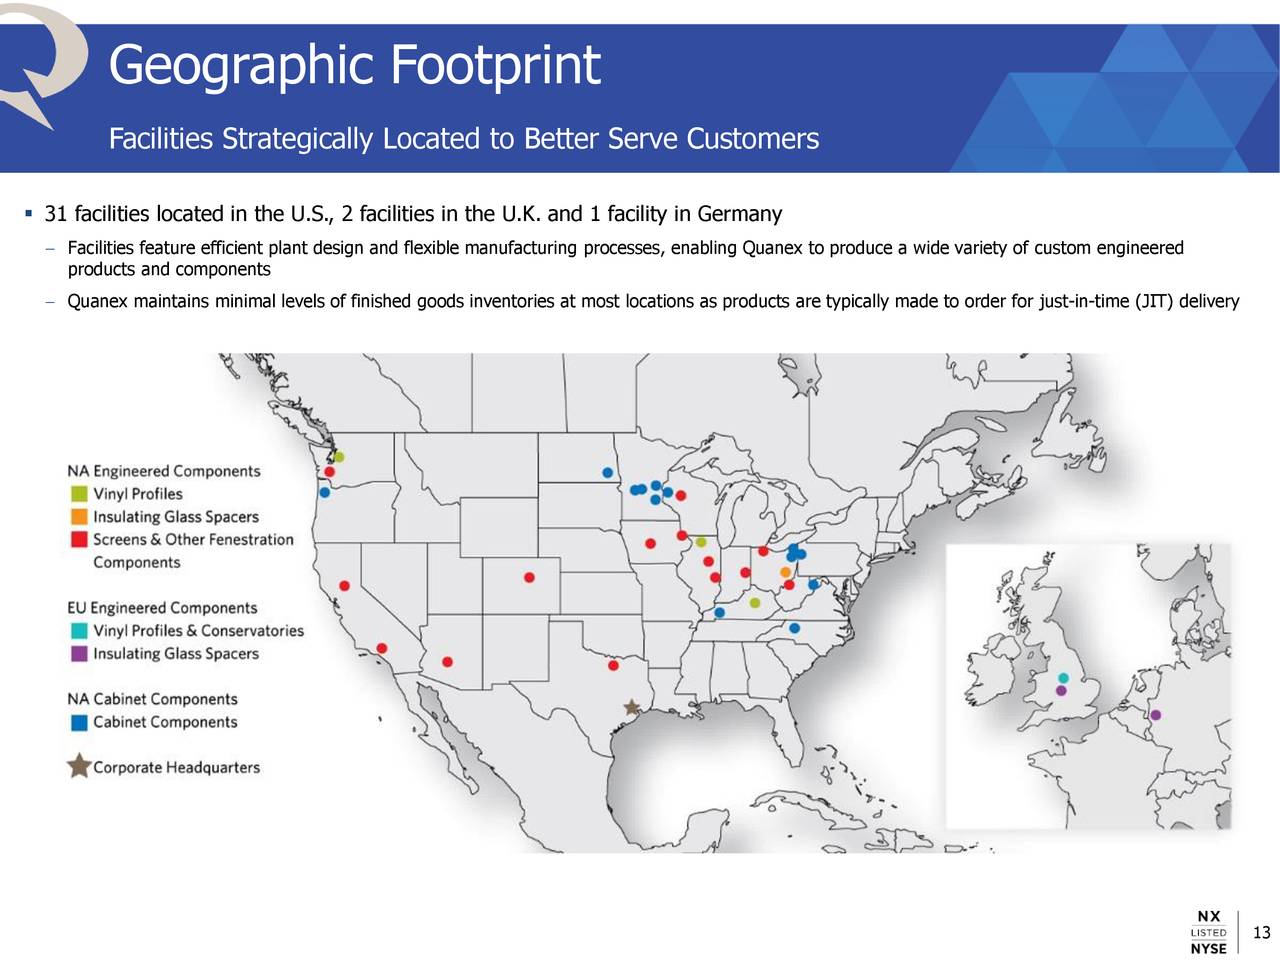 Geographic Footprint